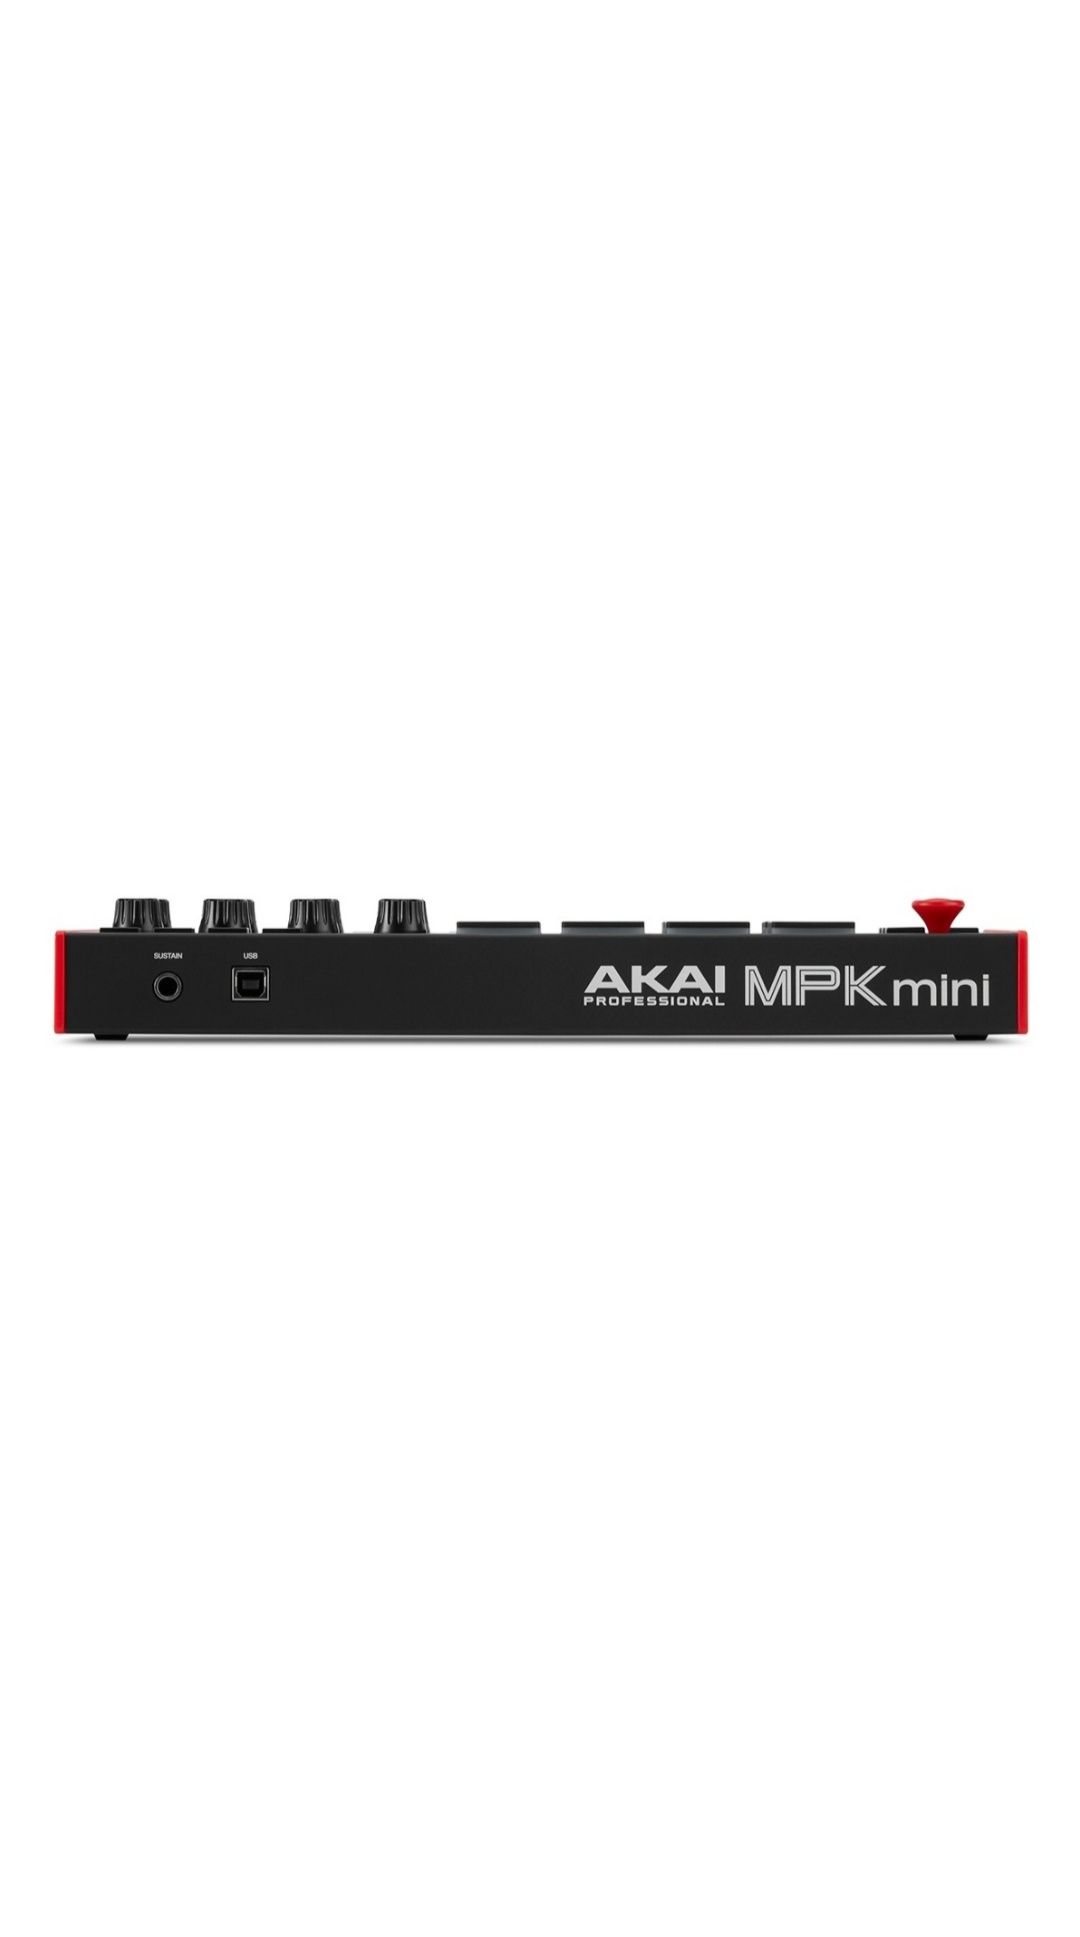 Akai MPK mini black red